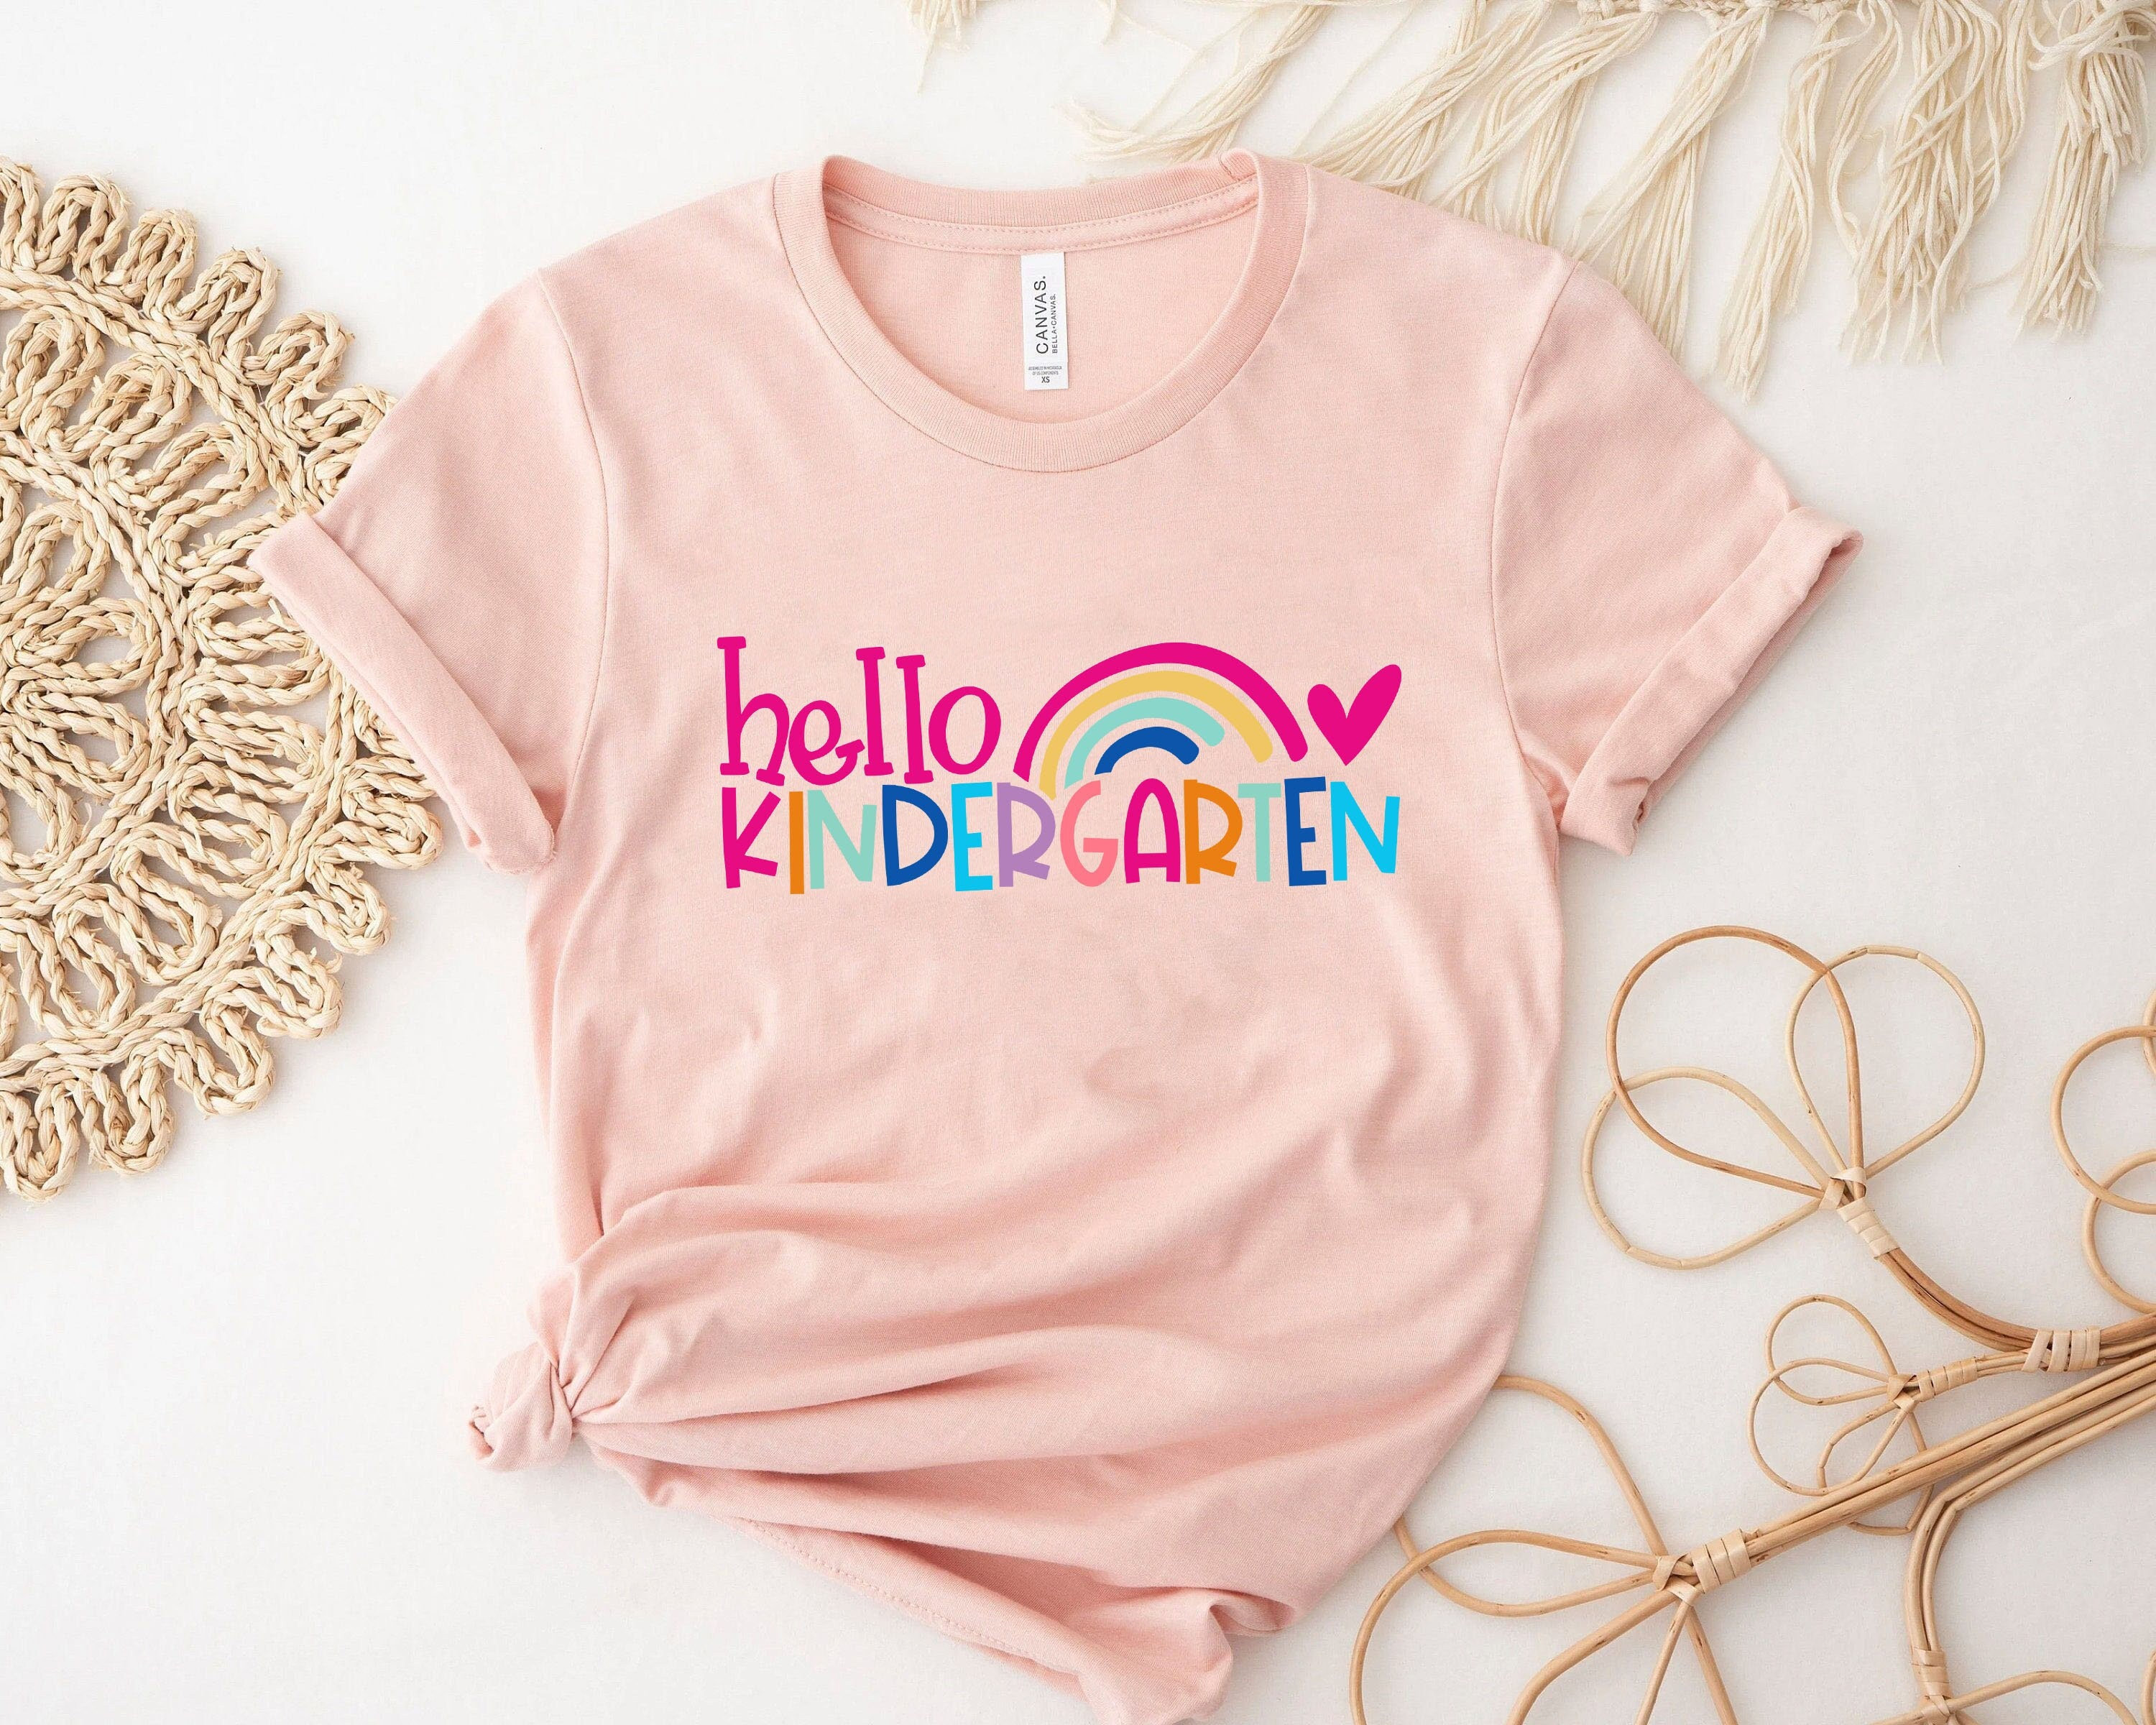 - Kindergarten Etsy Shirts